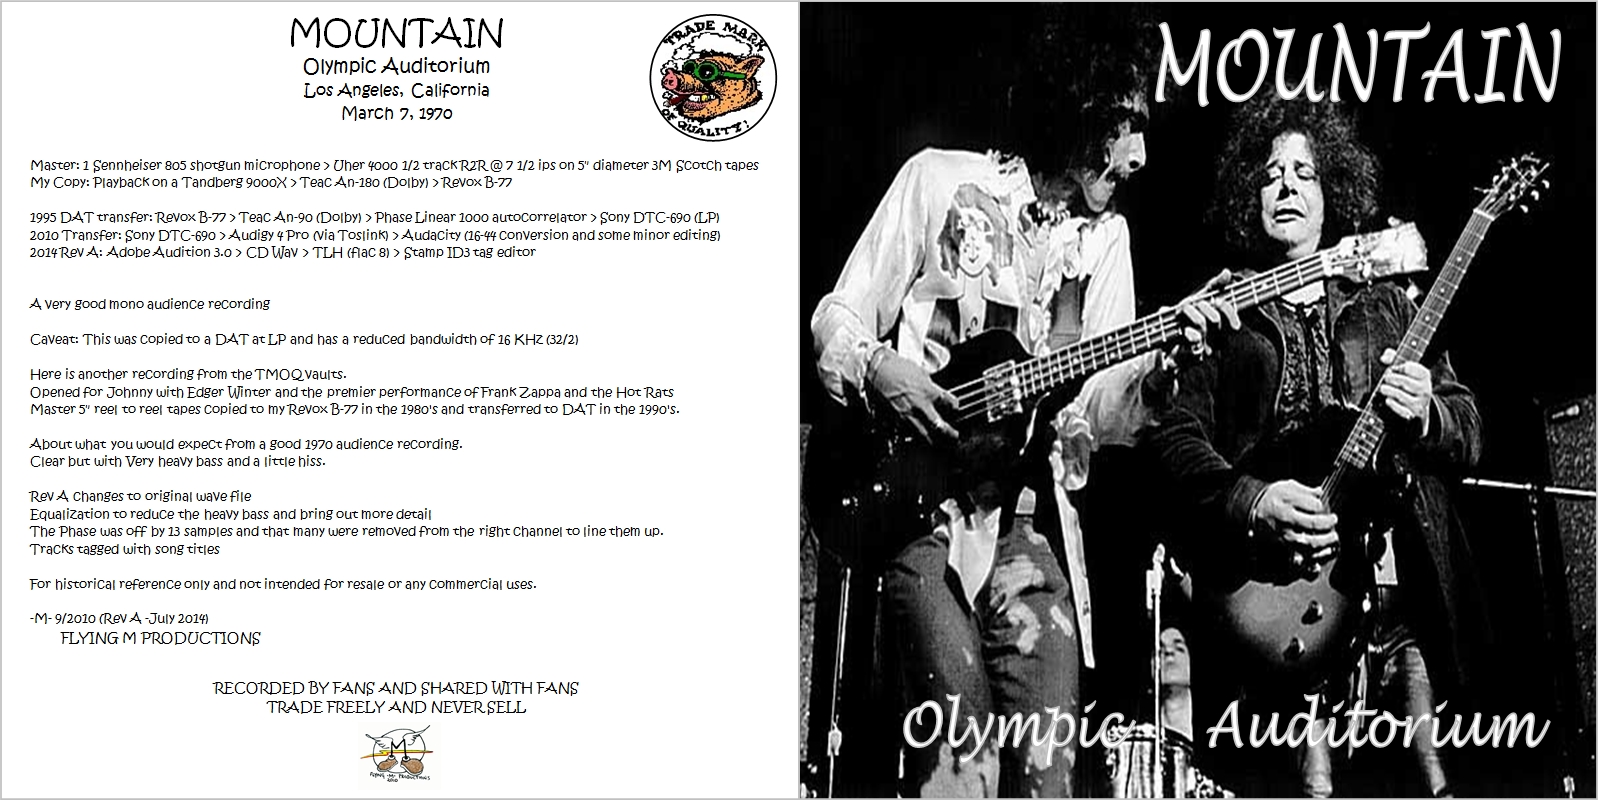 Mountain1970-03-07TheOlympicAuditoriumLosAngelesCA (1).JPG